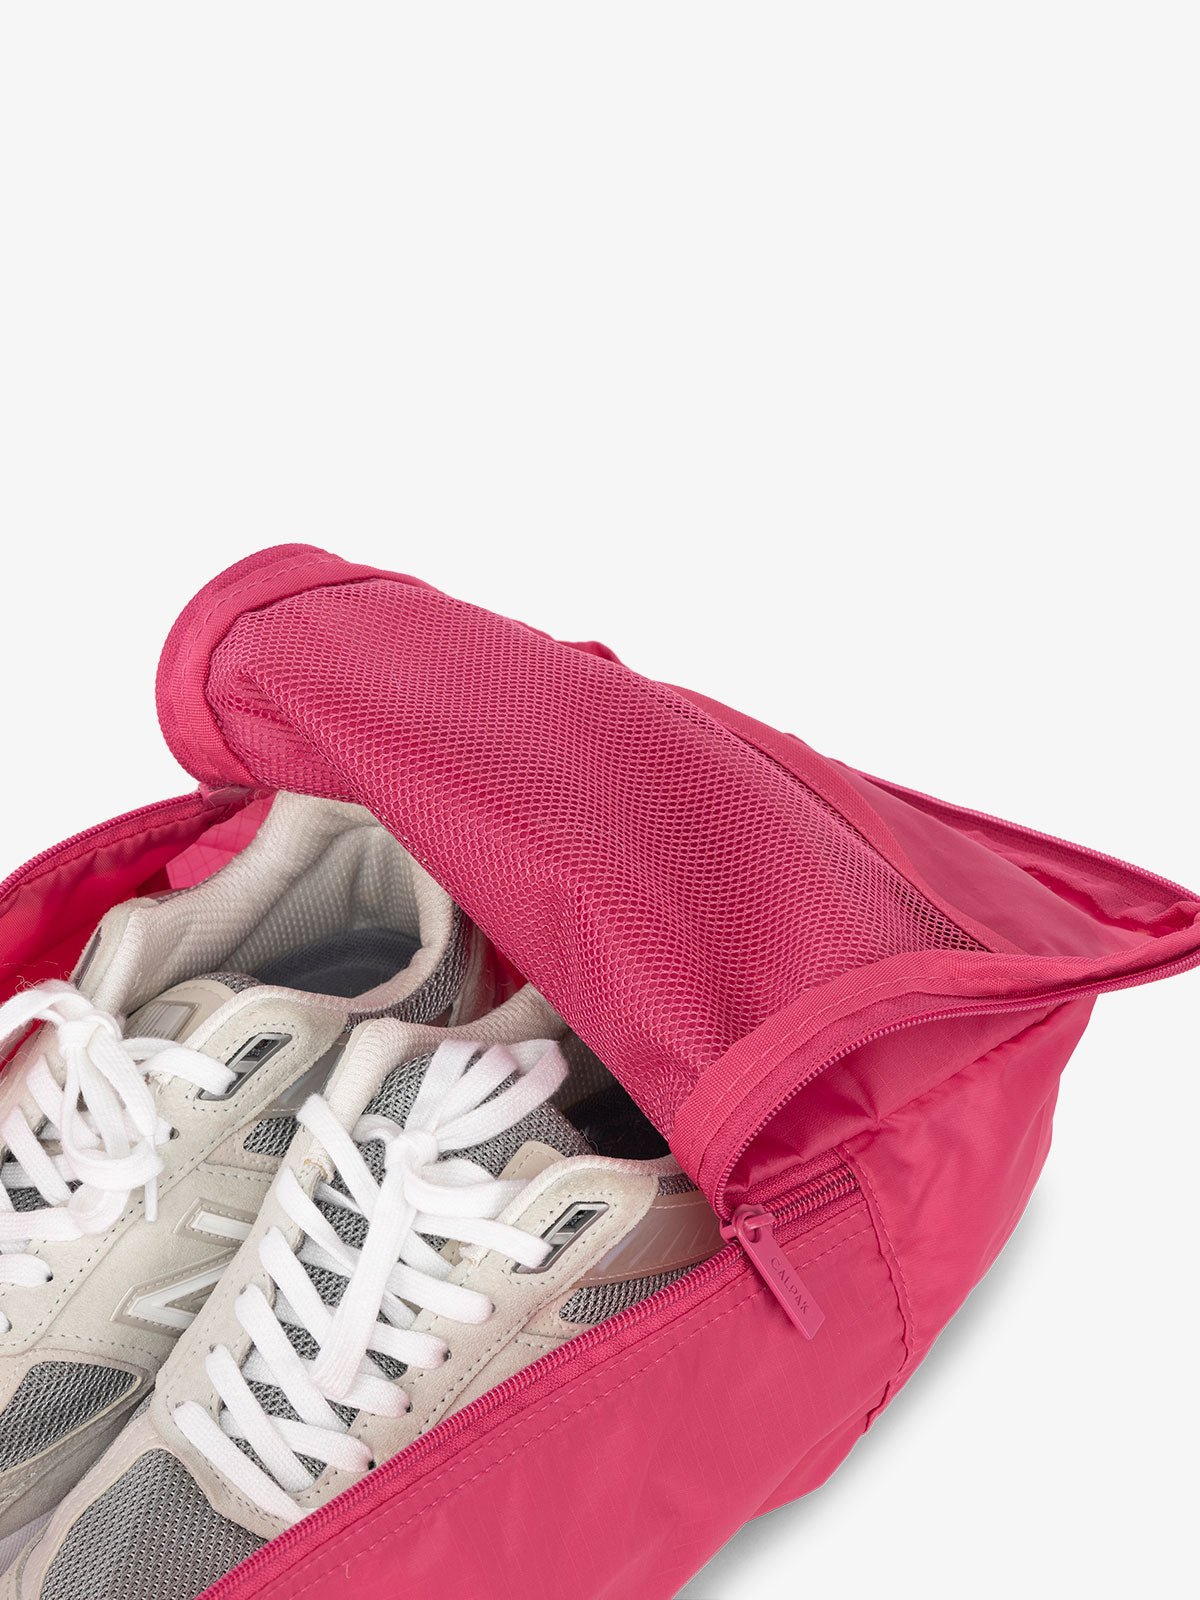 CALPAK Compakt zippered shoe travel bag with mesh pocket in pink